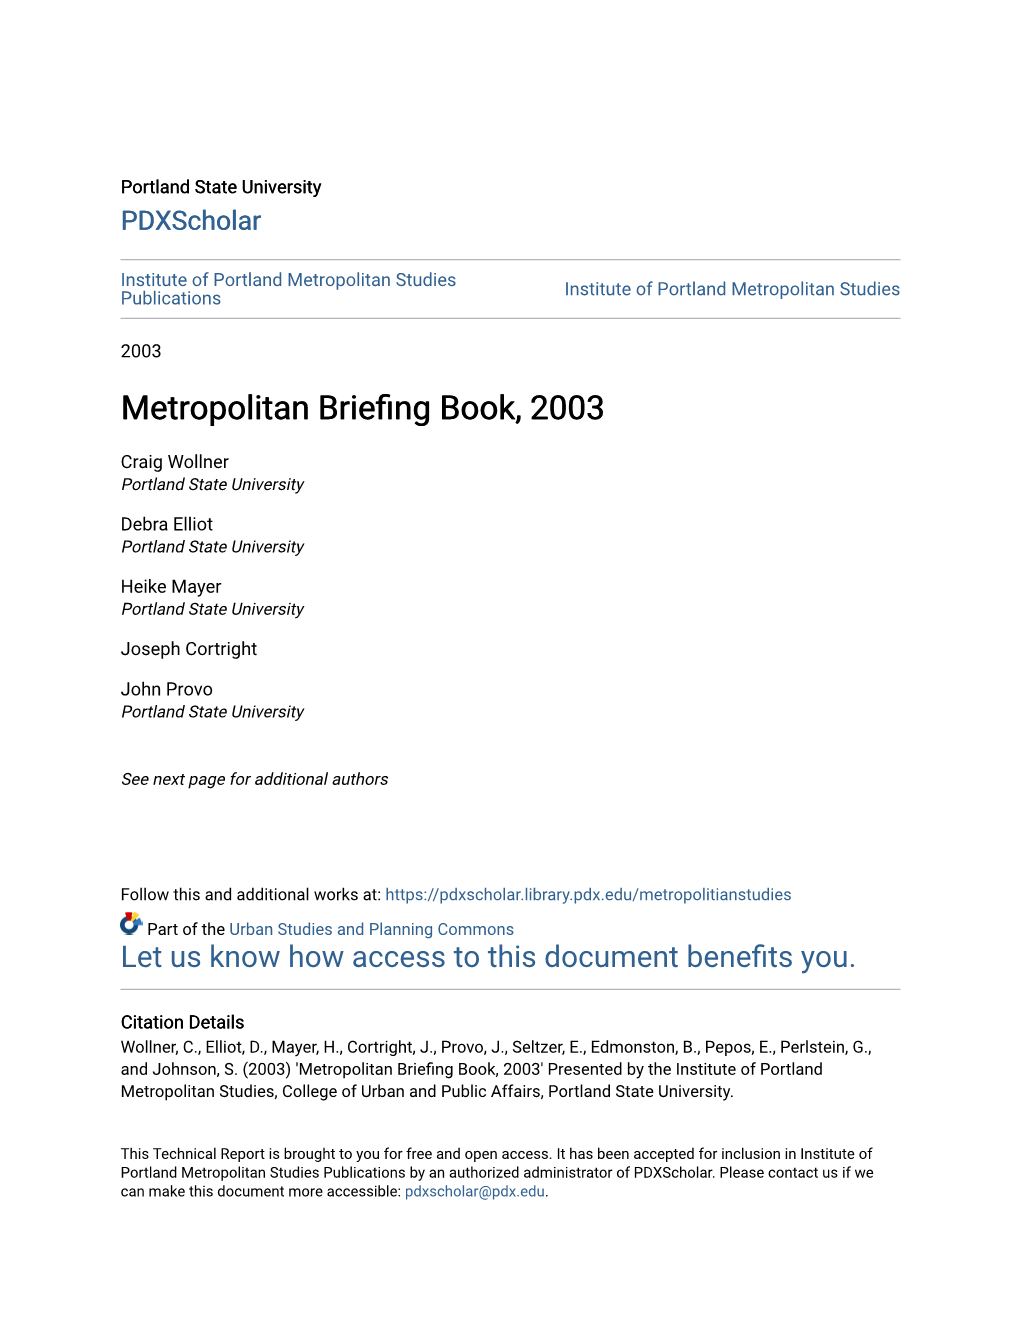 Metropolitan Briefing Book, 2003